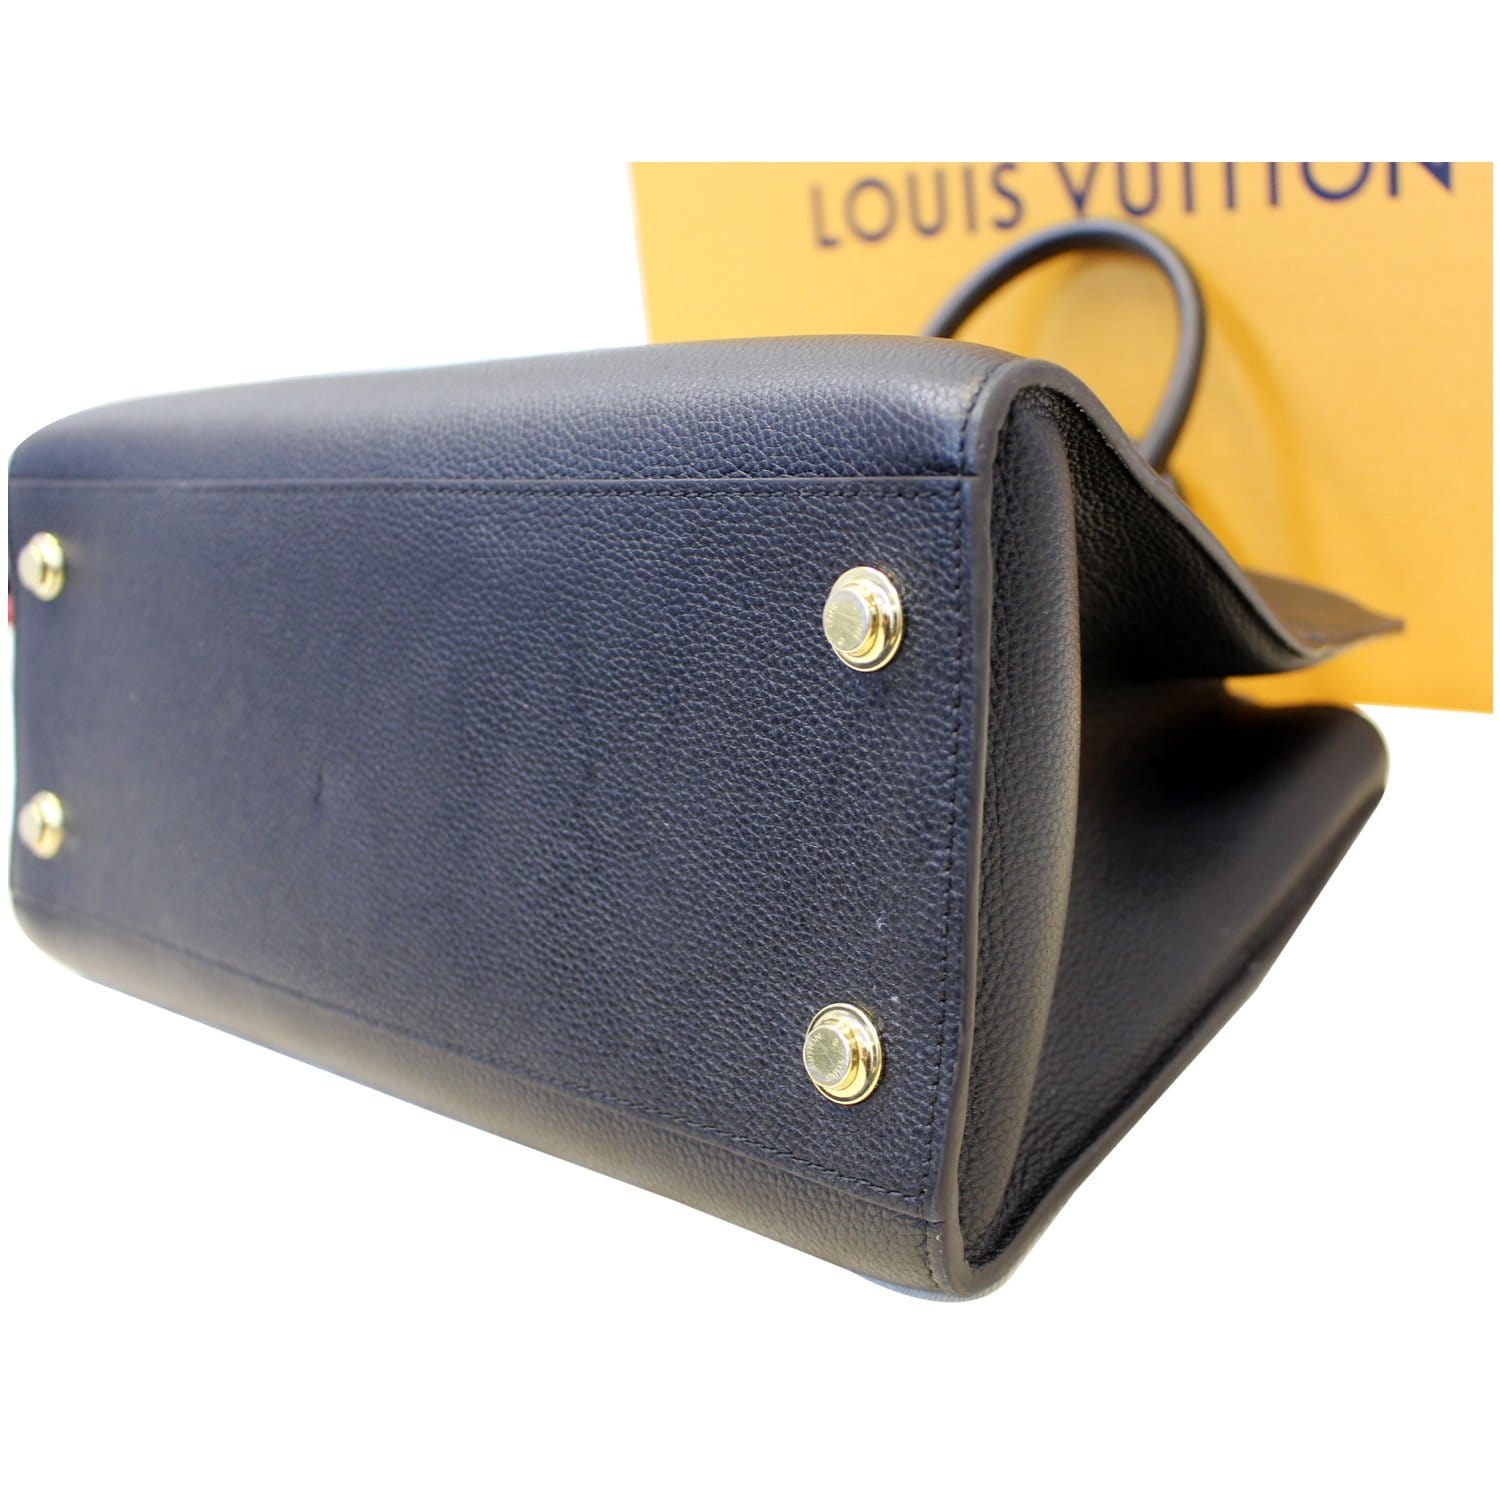 Louis Vuitton Noir/Galet Grained Leather City Steamer MM Bag